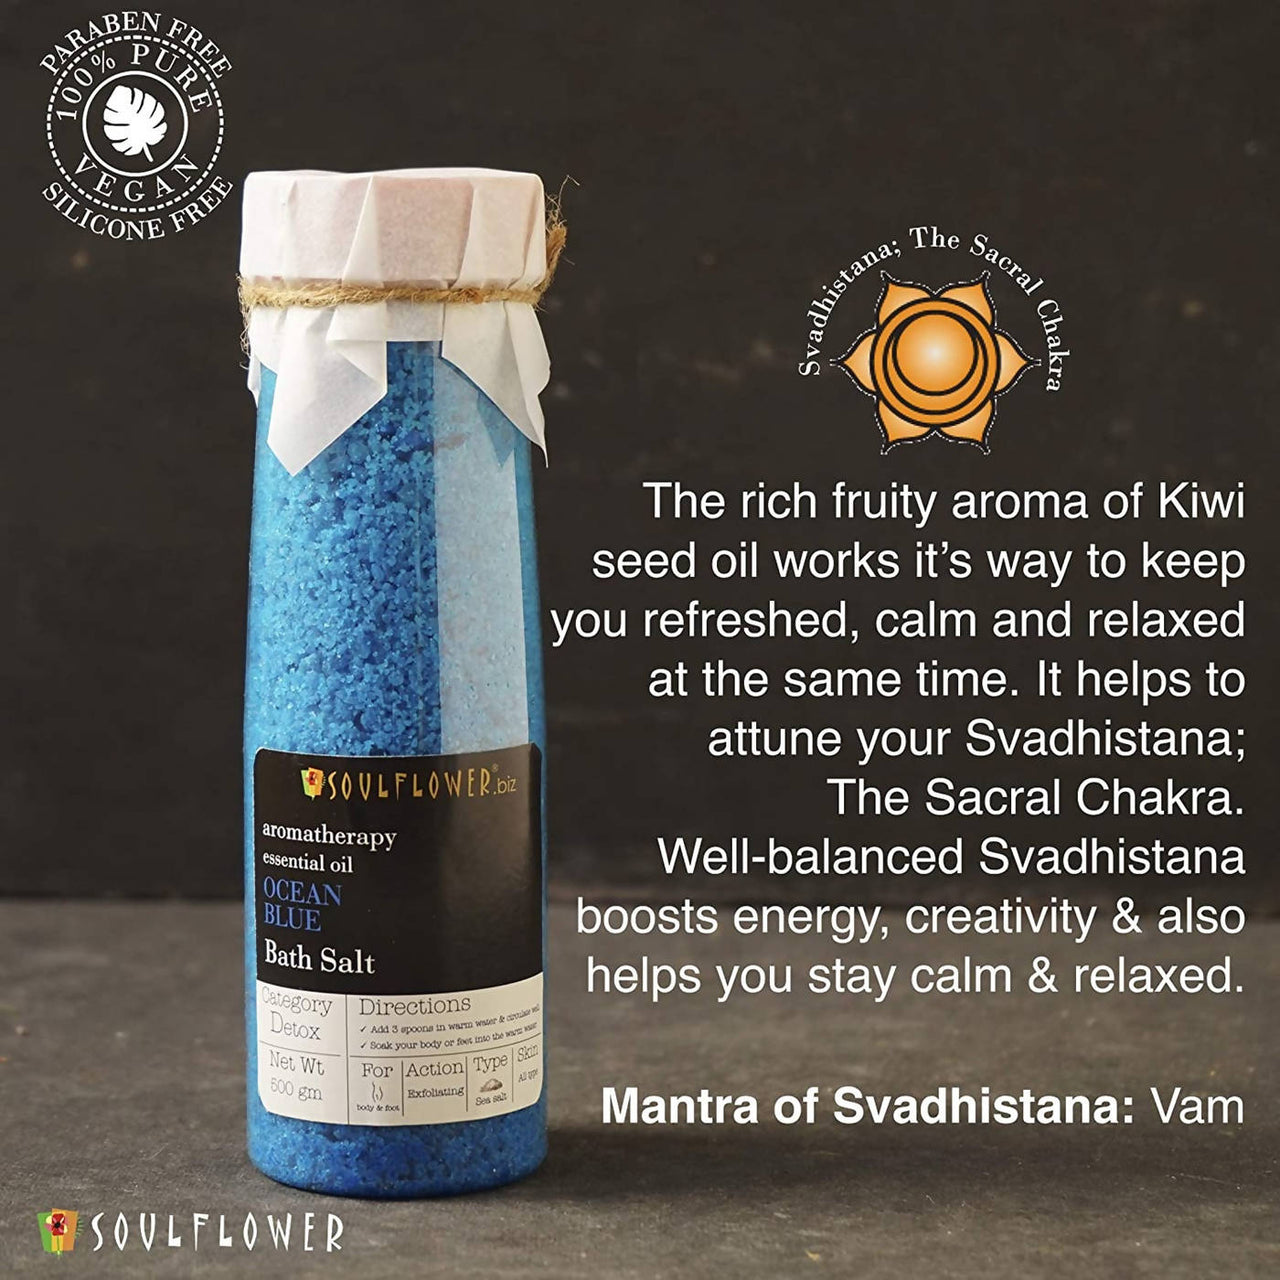 Soulflower Aromatherapy Essential Oil Ocean Blue Bath Salt Online